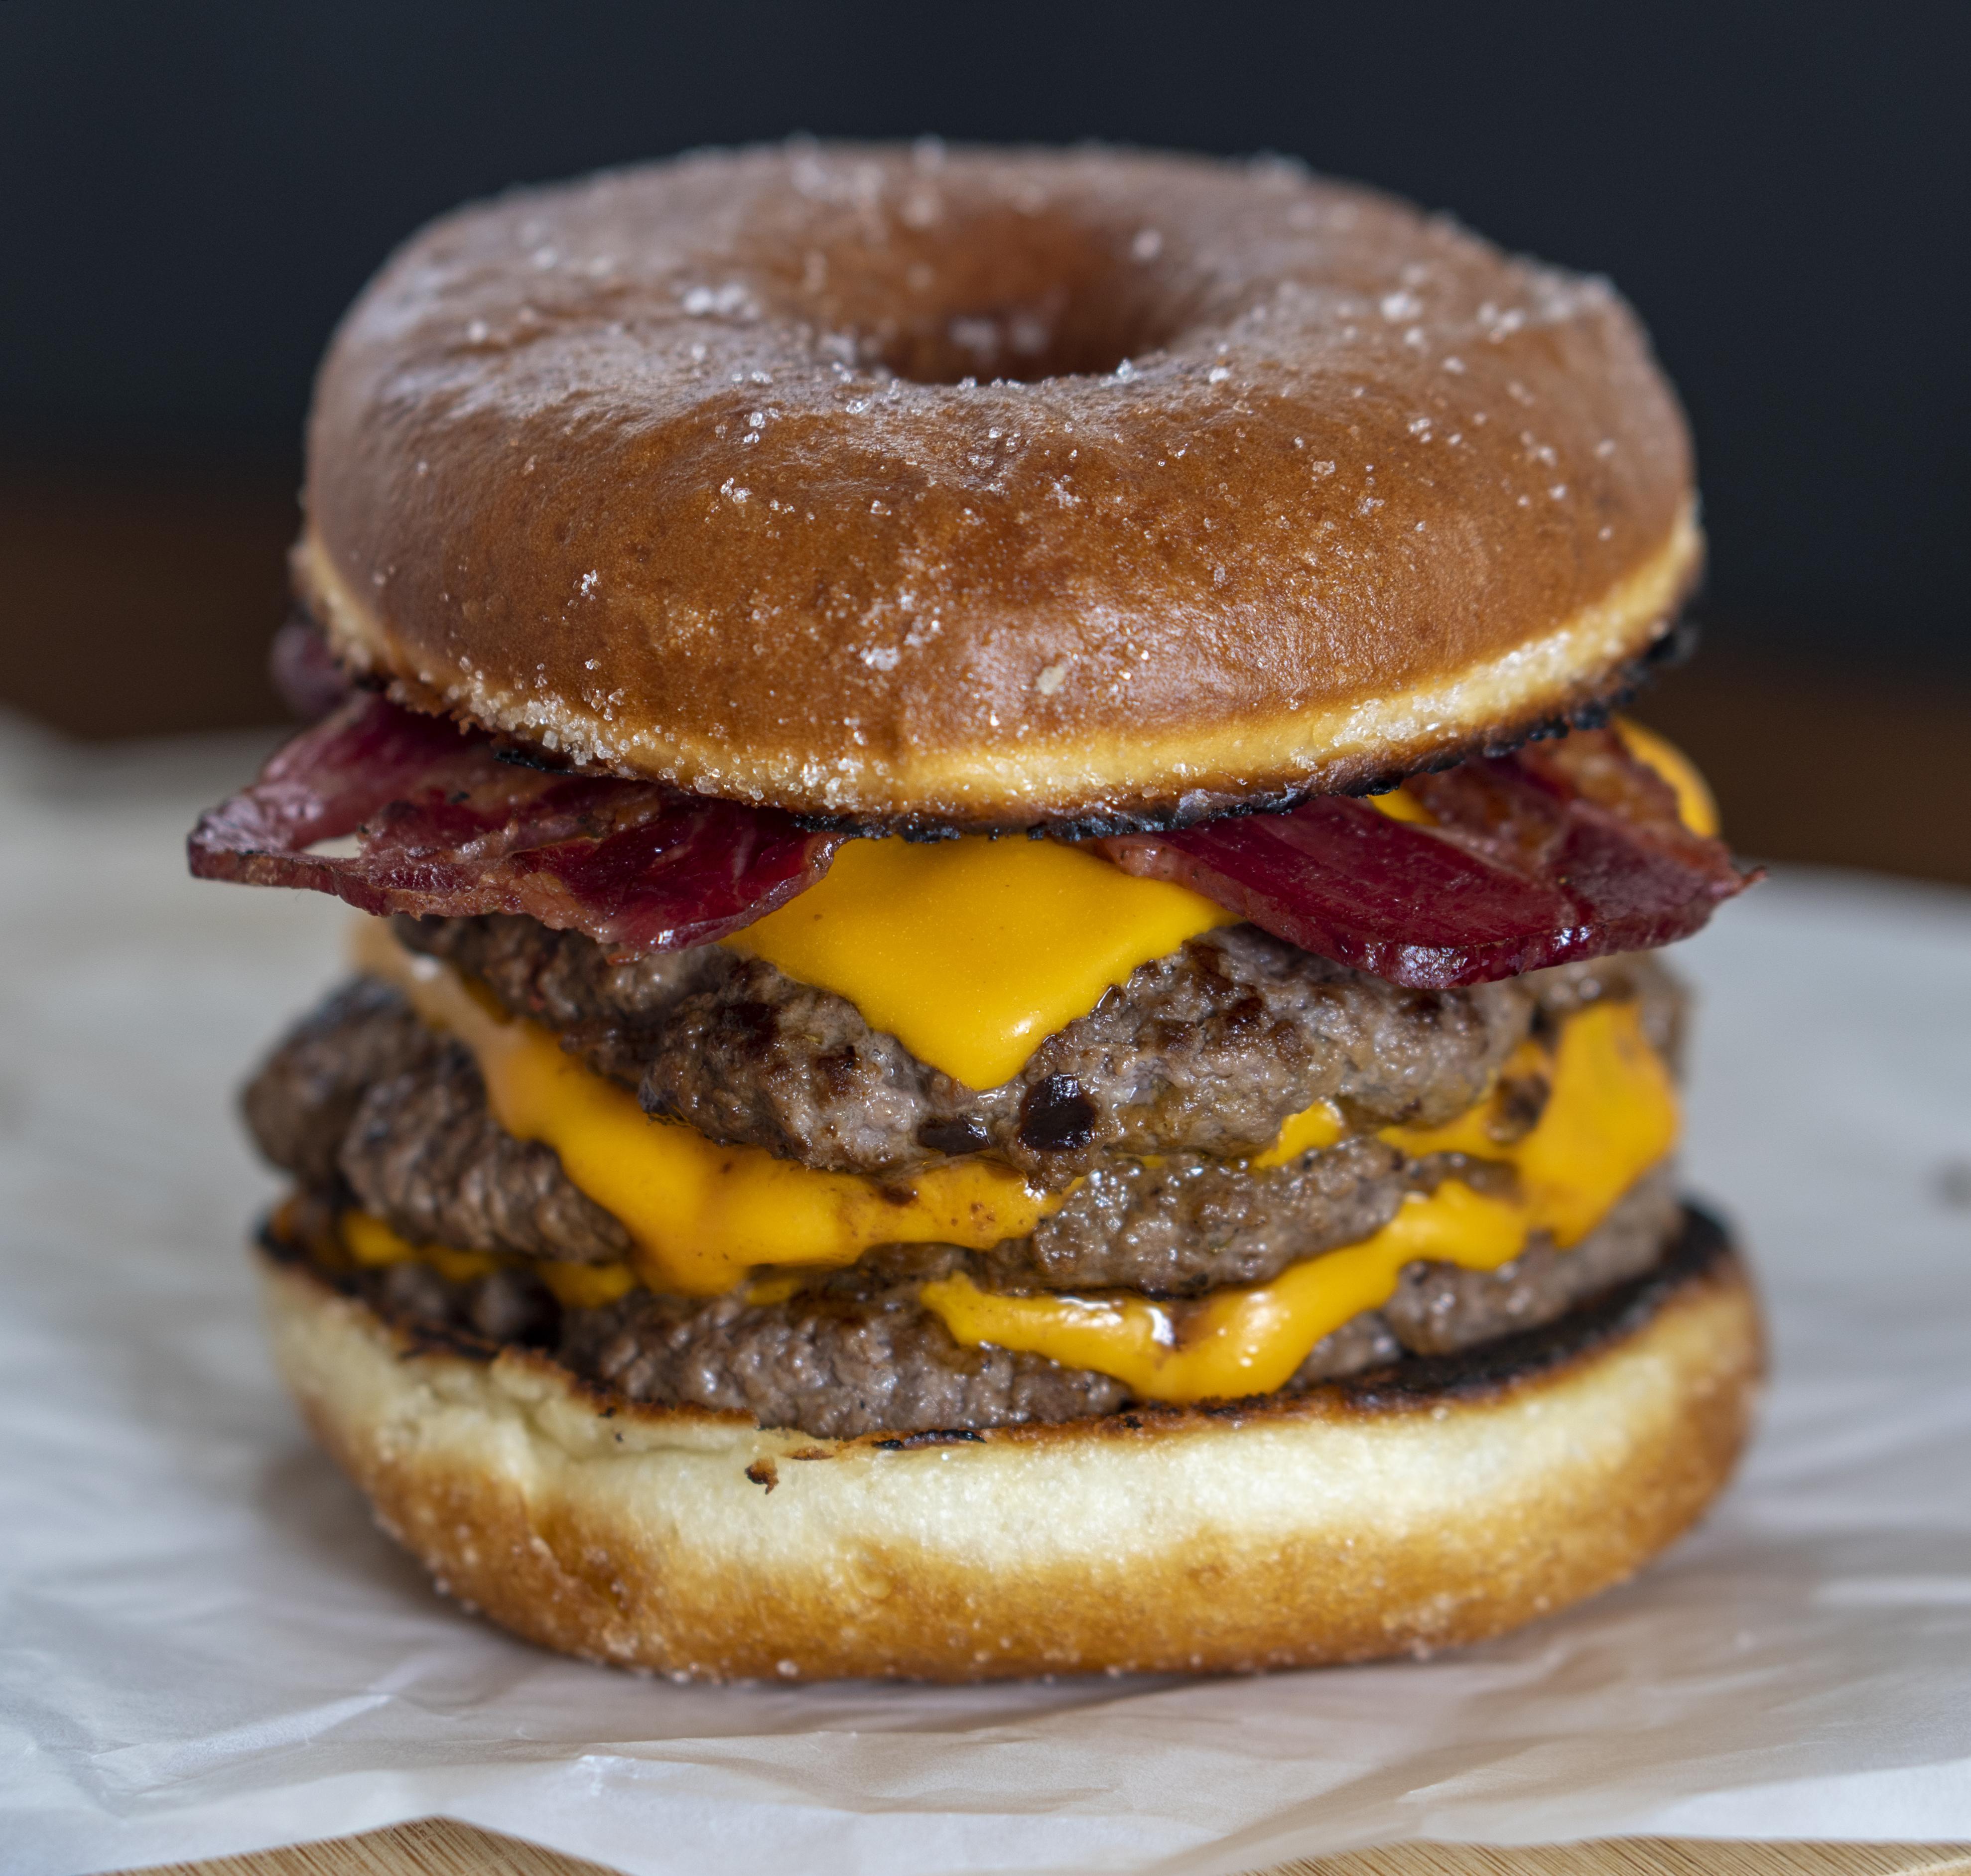 The mighty doughnut cheeseburger... *heavy breathing*